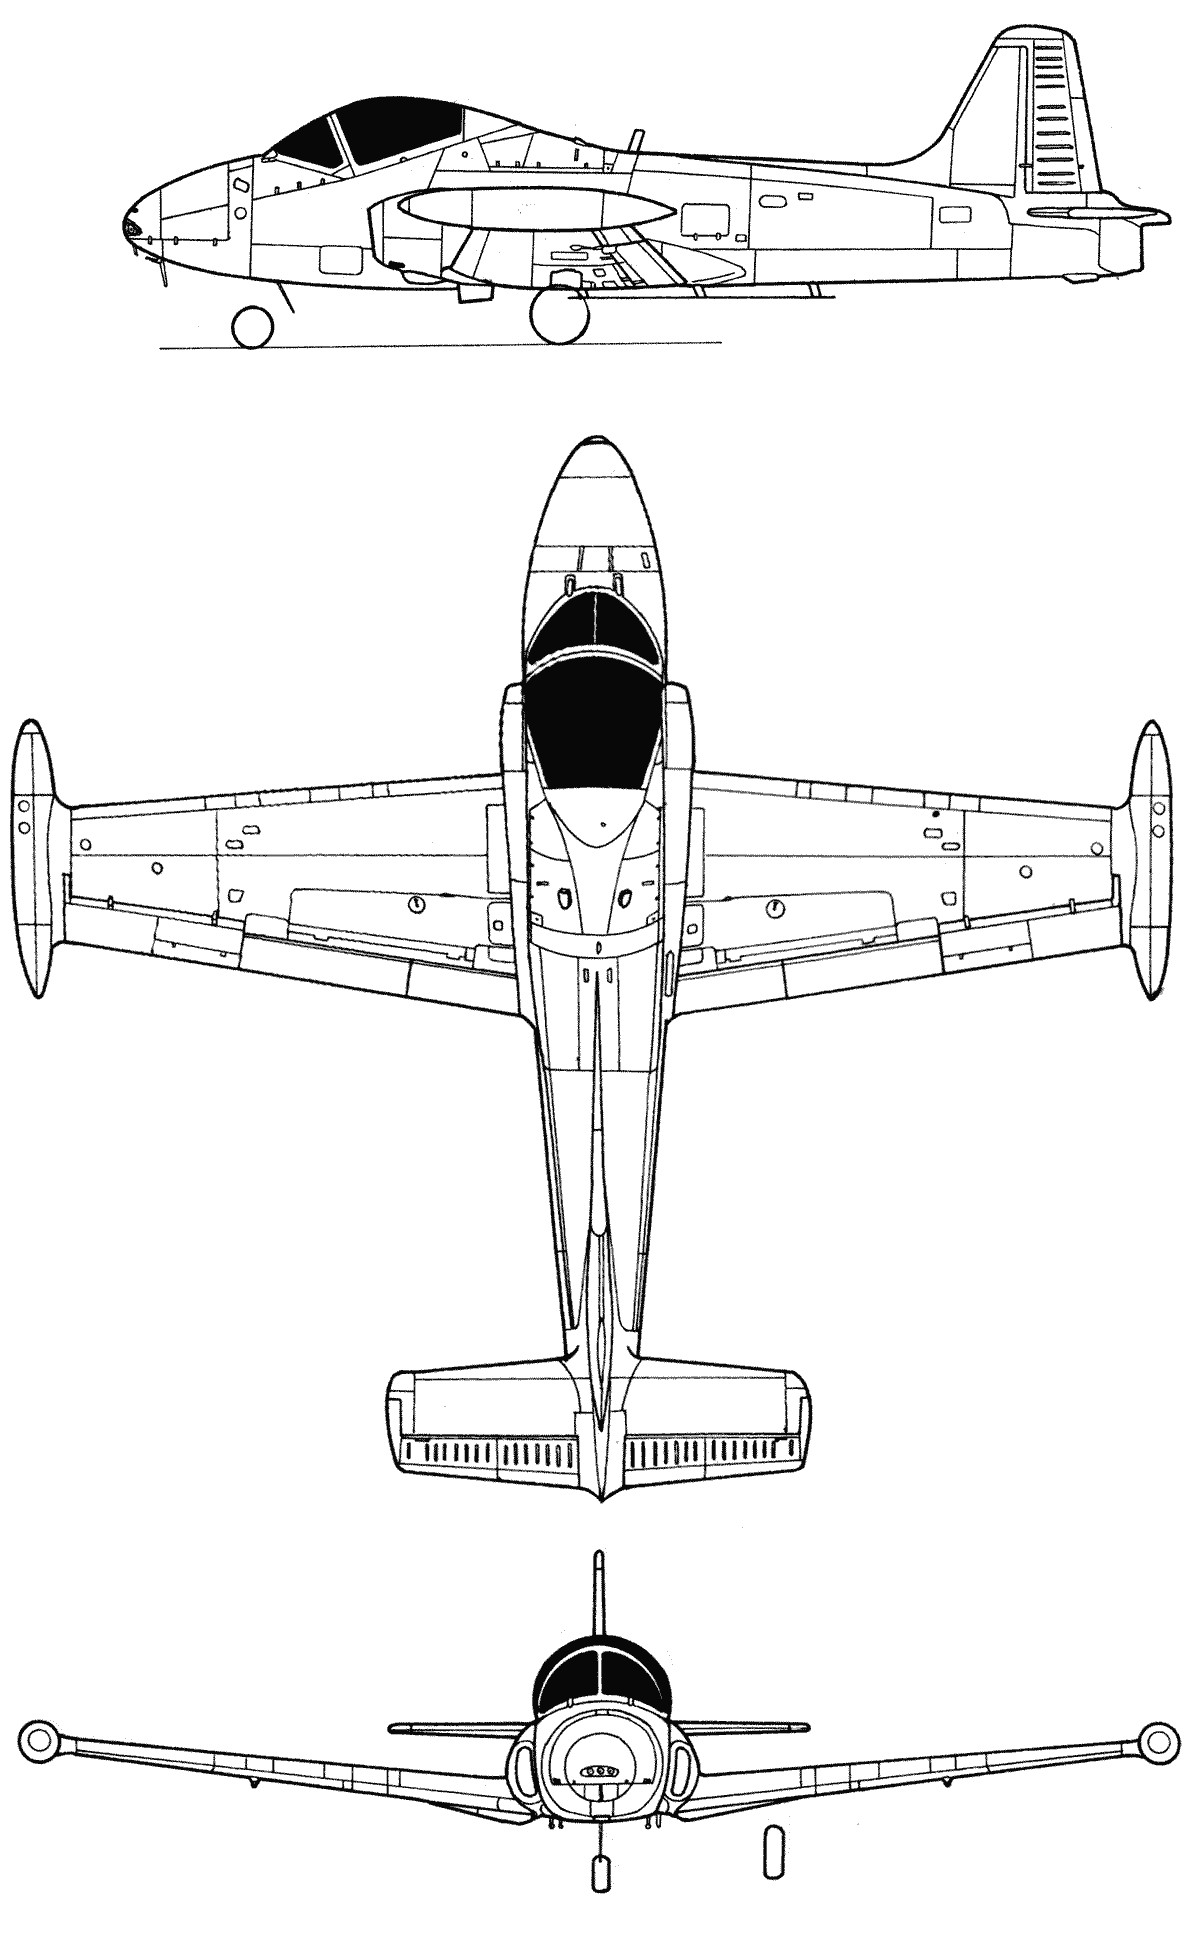 BAC 167 Strikemaster blueprint